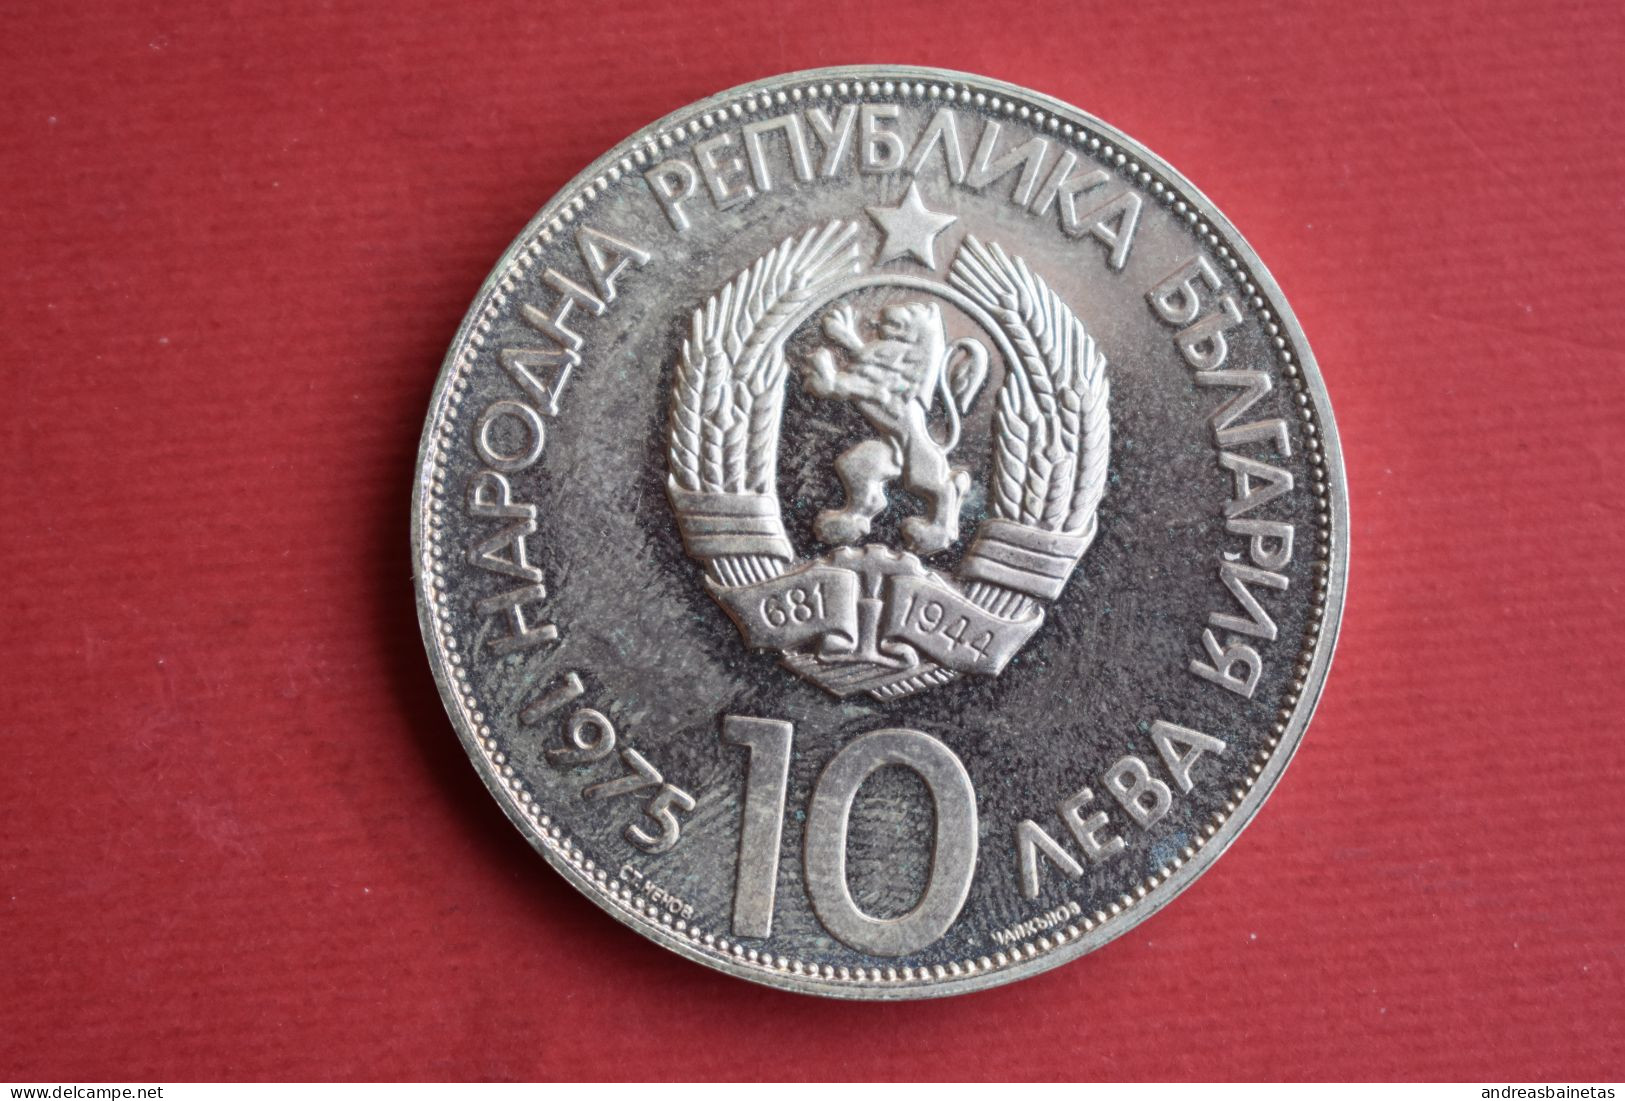 Coins Bulgaria  Proof    10 Leva Olympic Congress 1975 KM#93.2 Edge In Cyrillic - Bulgarie